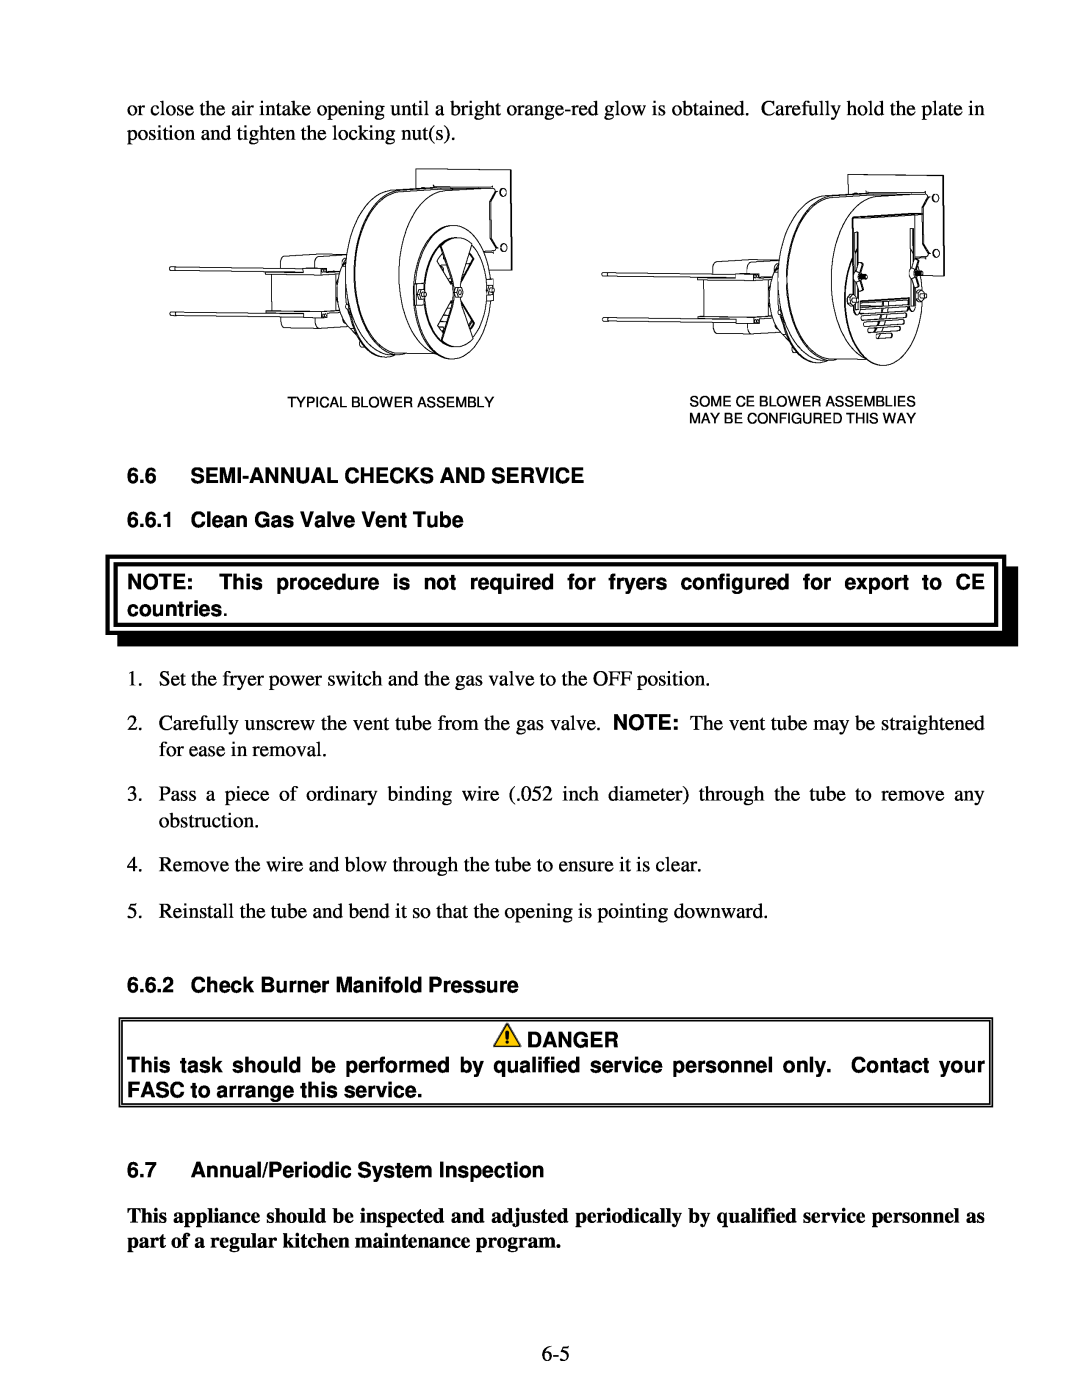 Frymaster 8196339 SEMI-ANNUAL CHECKS AND SERVICE 6.6.1 Clean Gas Valve Vent Tube, Check Burner Manifold Pressure DANGER 